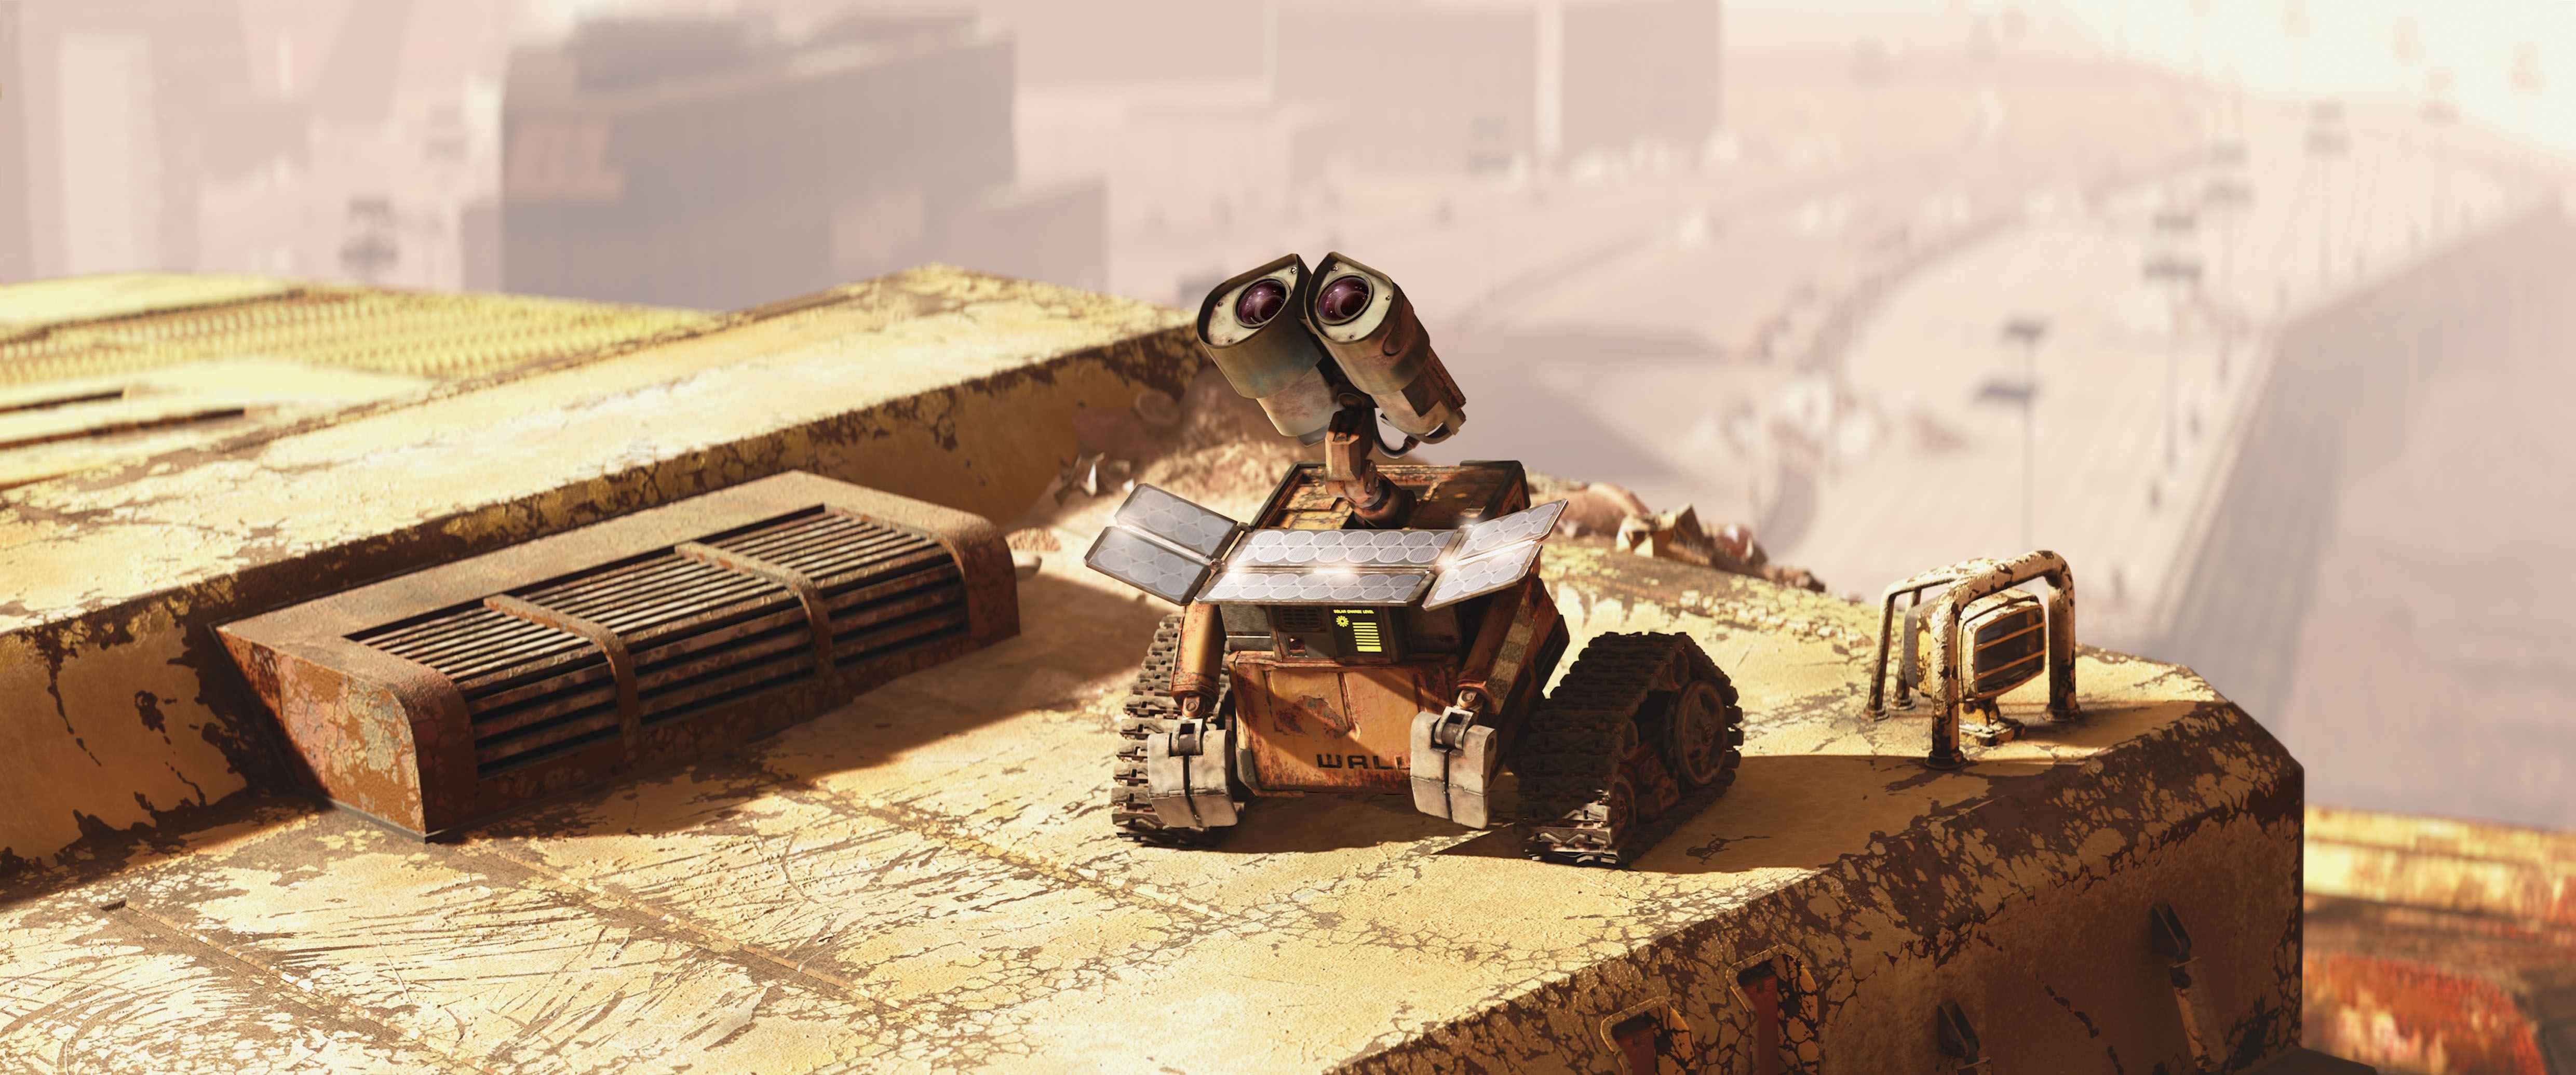 General 4961x2070 WALL-E robot animated movies movies Pixar Animation Studios digital art